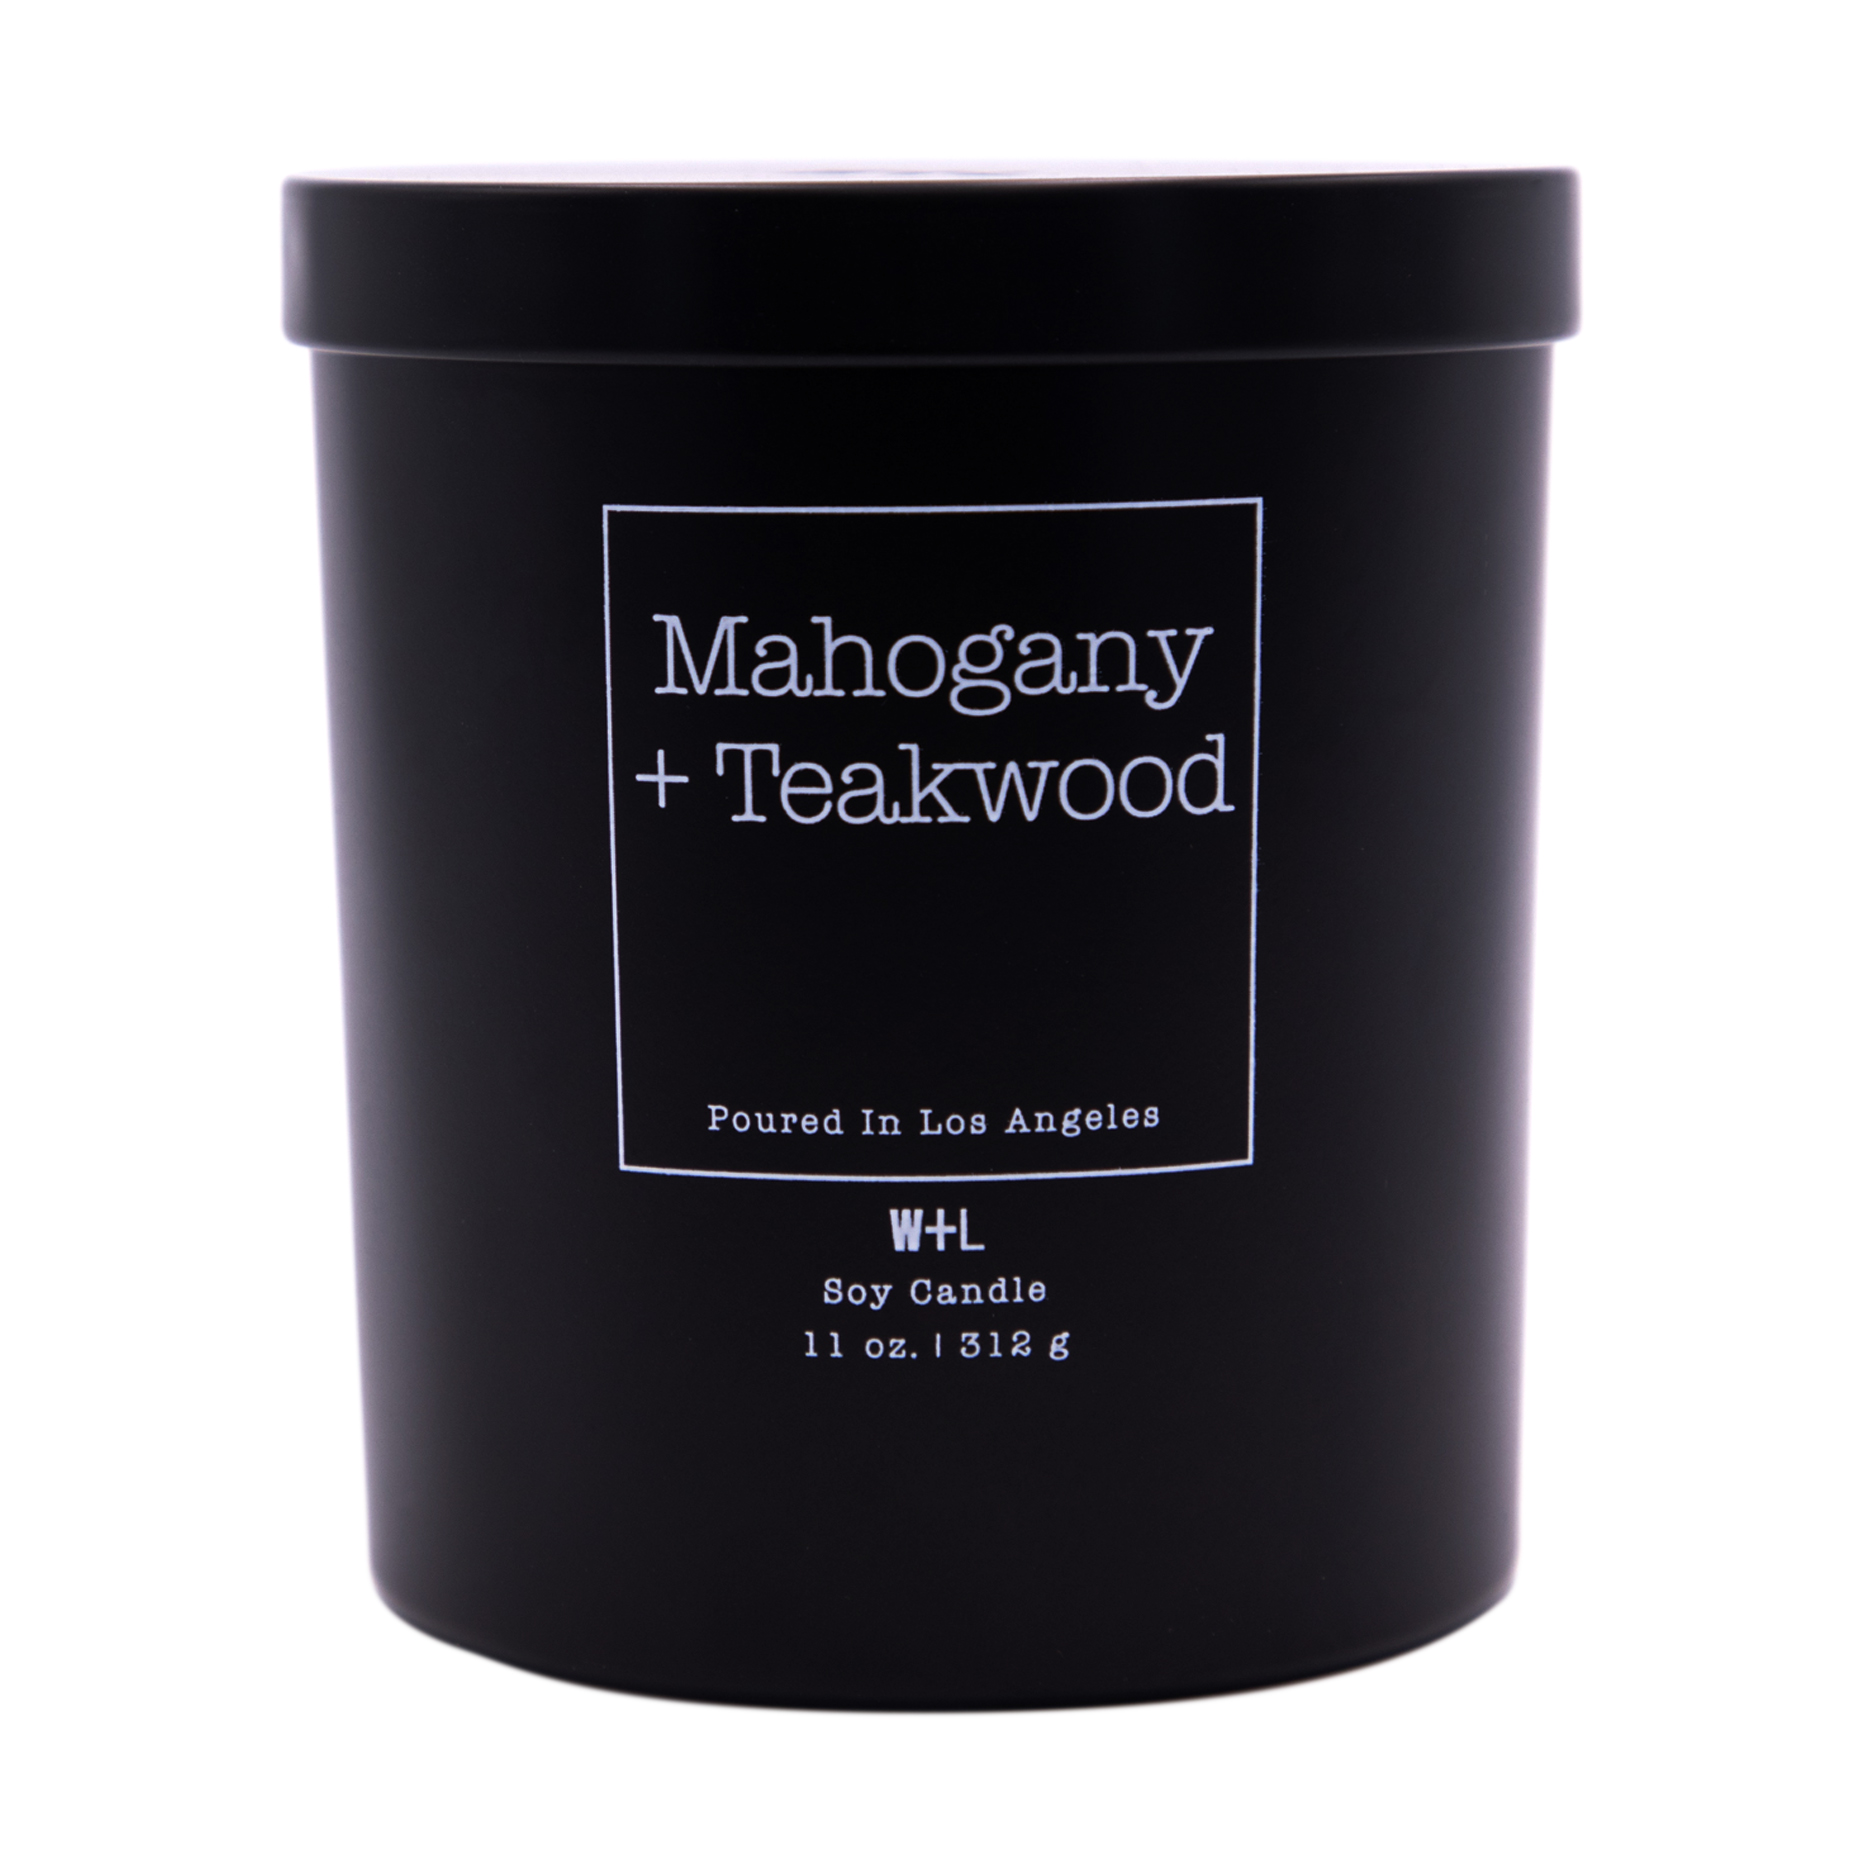 Mahogany + Teakwood